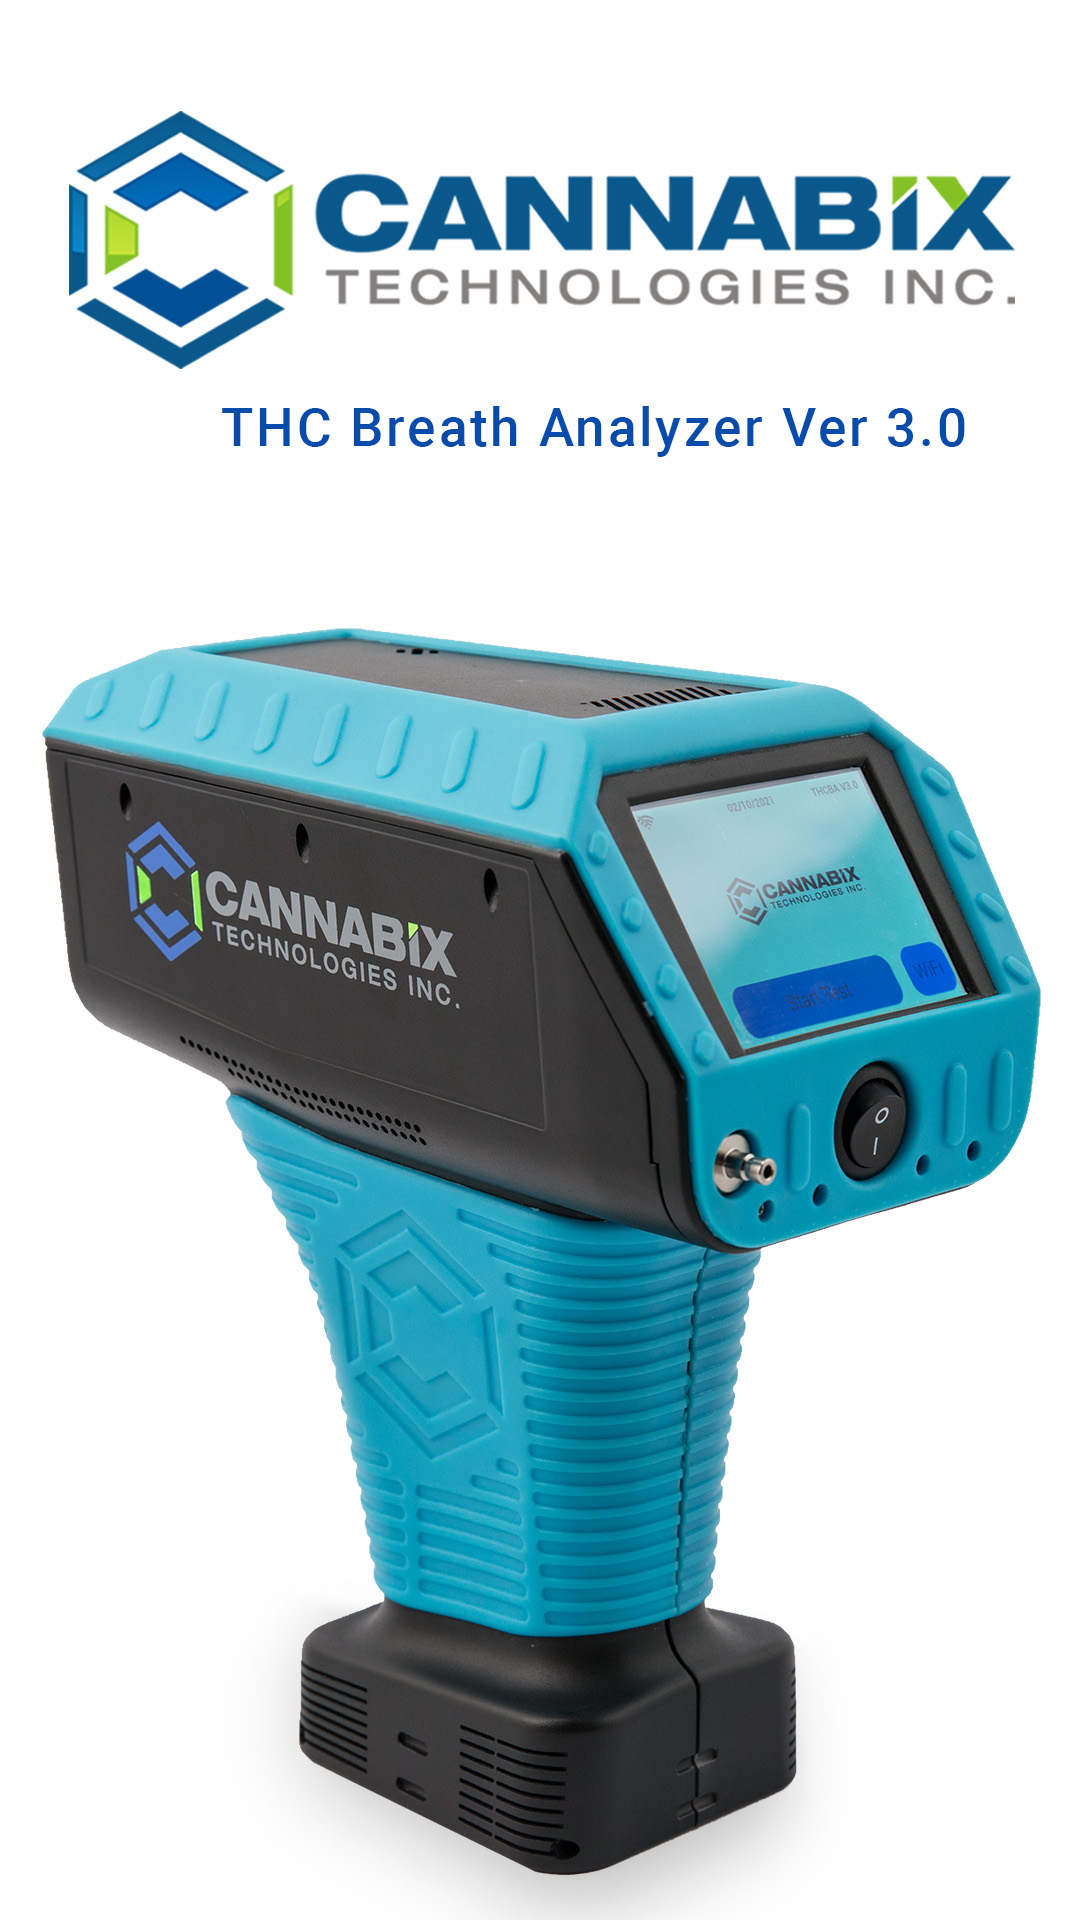 Cannabix Technologies Inc. THC Breath Analyzer Ver 3.0